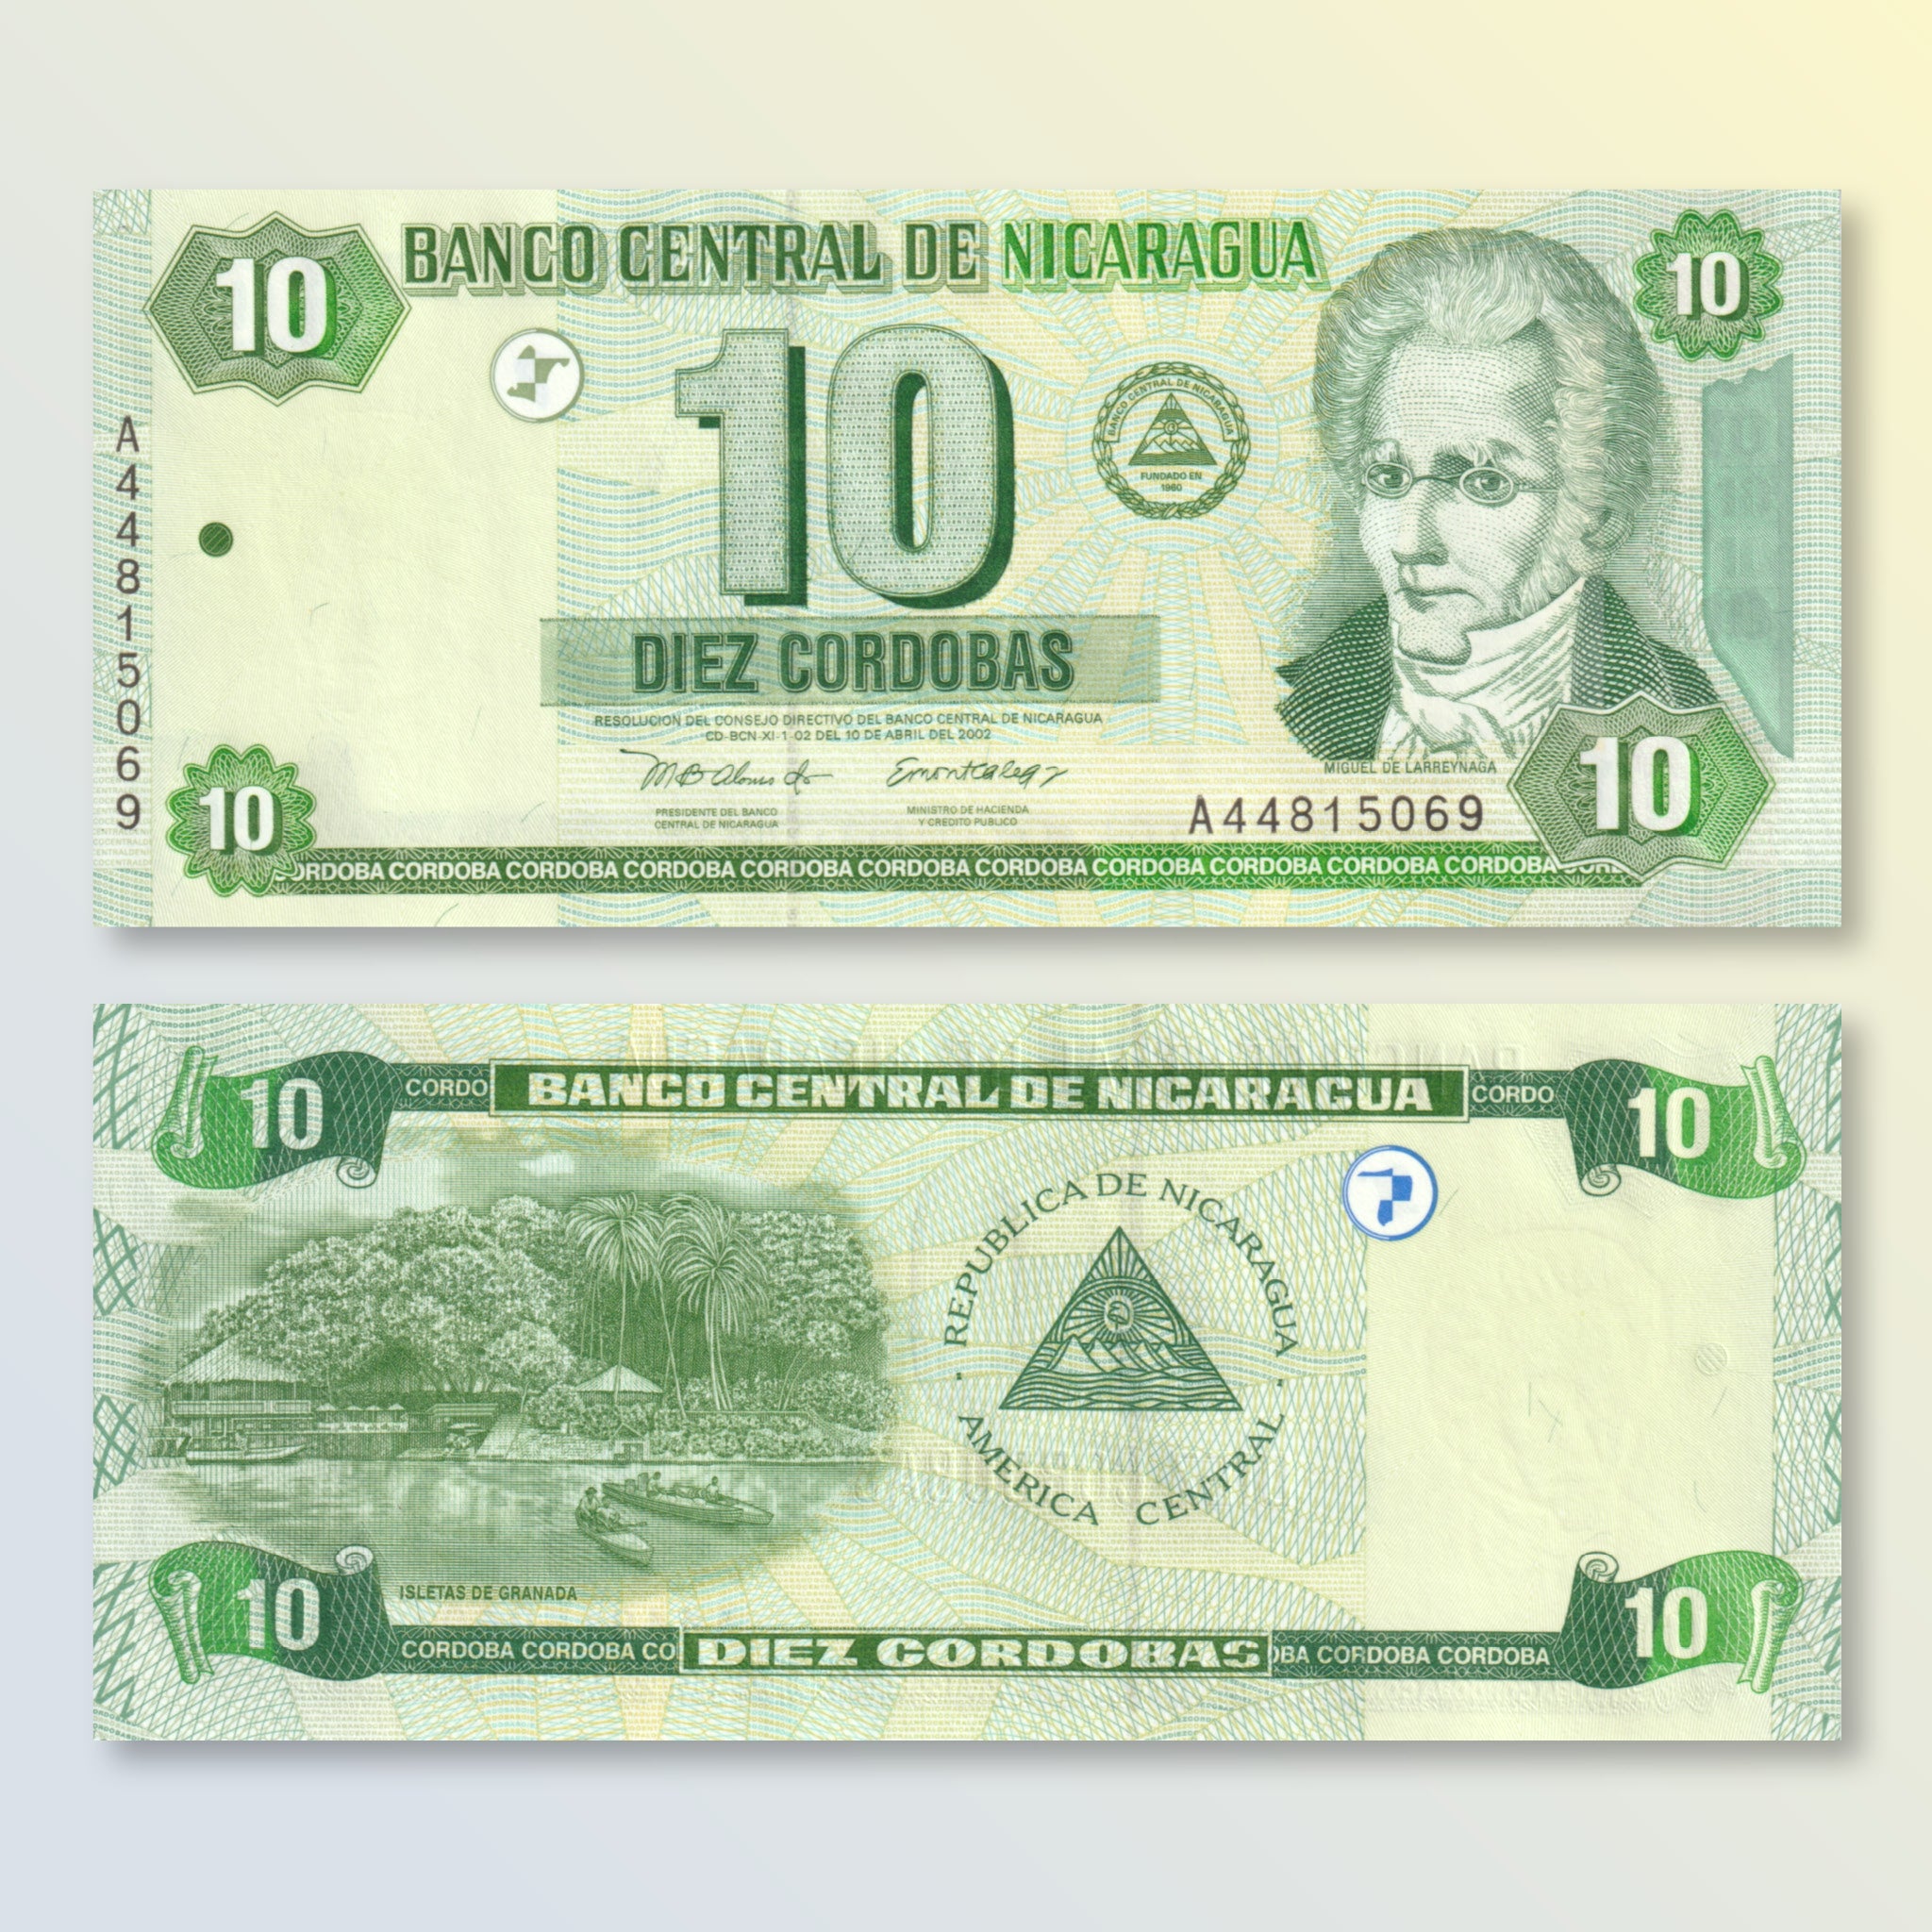 Nicaragua 10 Córdobas, 1992, B488a, P191, UNC - Robert's World Money - World Banknotes